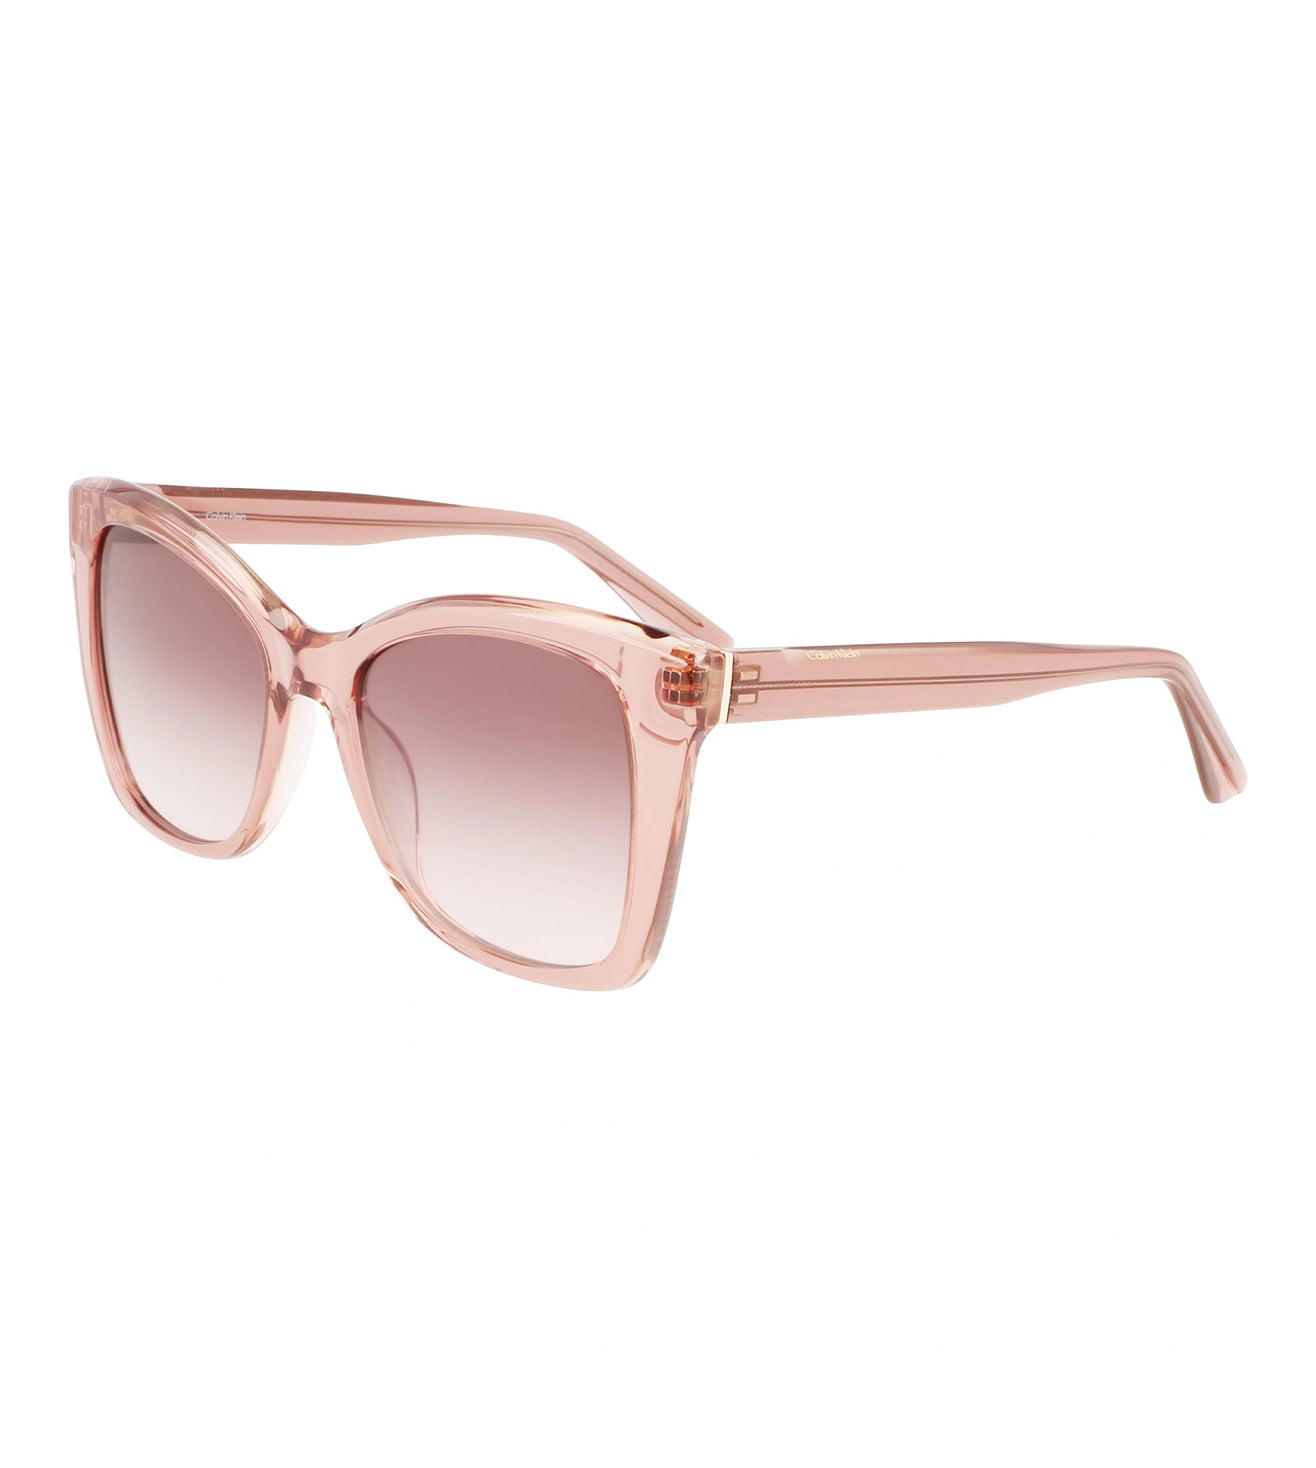 Calvin Klein Women's Gradient Brown/Rose Butterfly Sunglasses